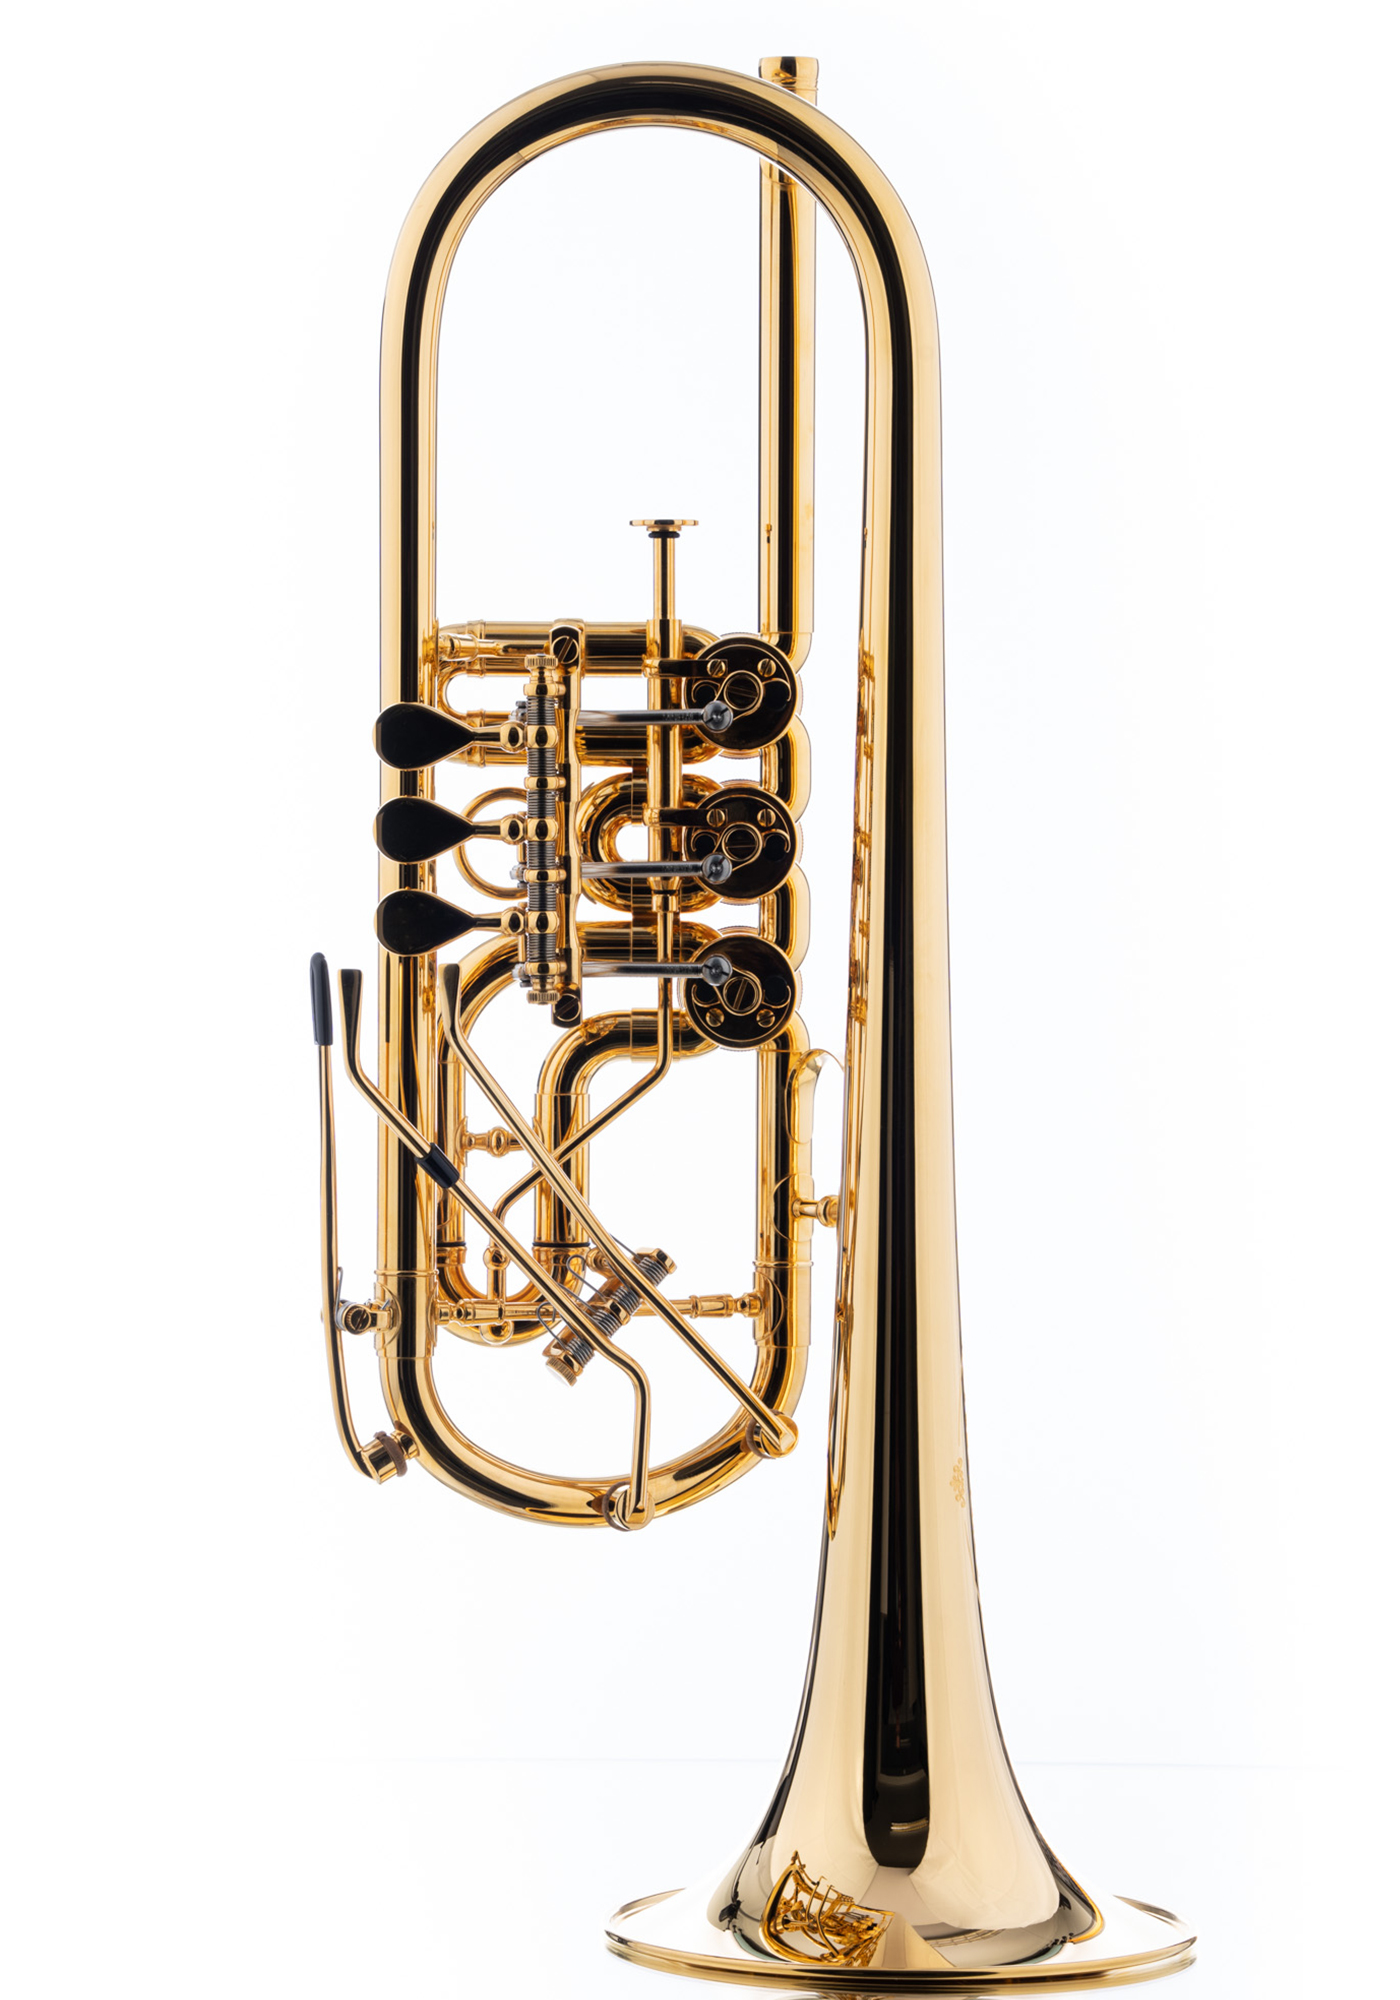 Schagerl C-Trompete "BERLIN K" heavy gold plated